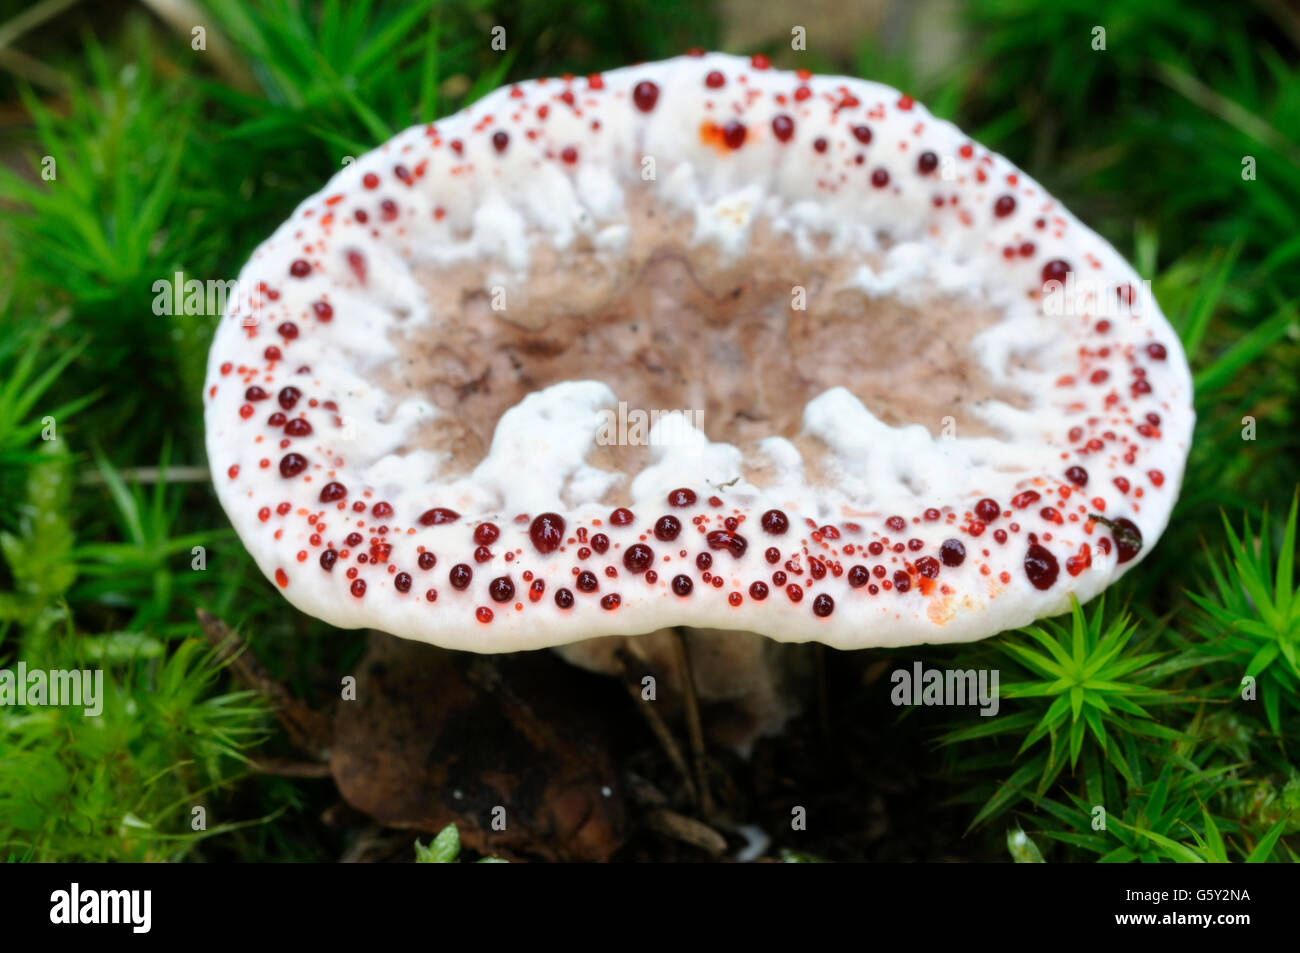 Bleeding tooth fungus / (Hydnellum peckii) Stock Photo